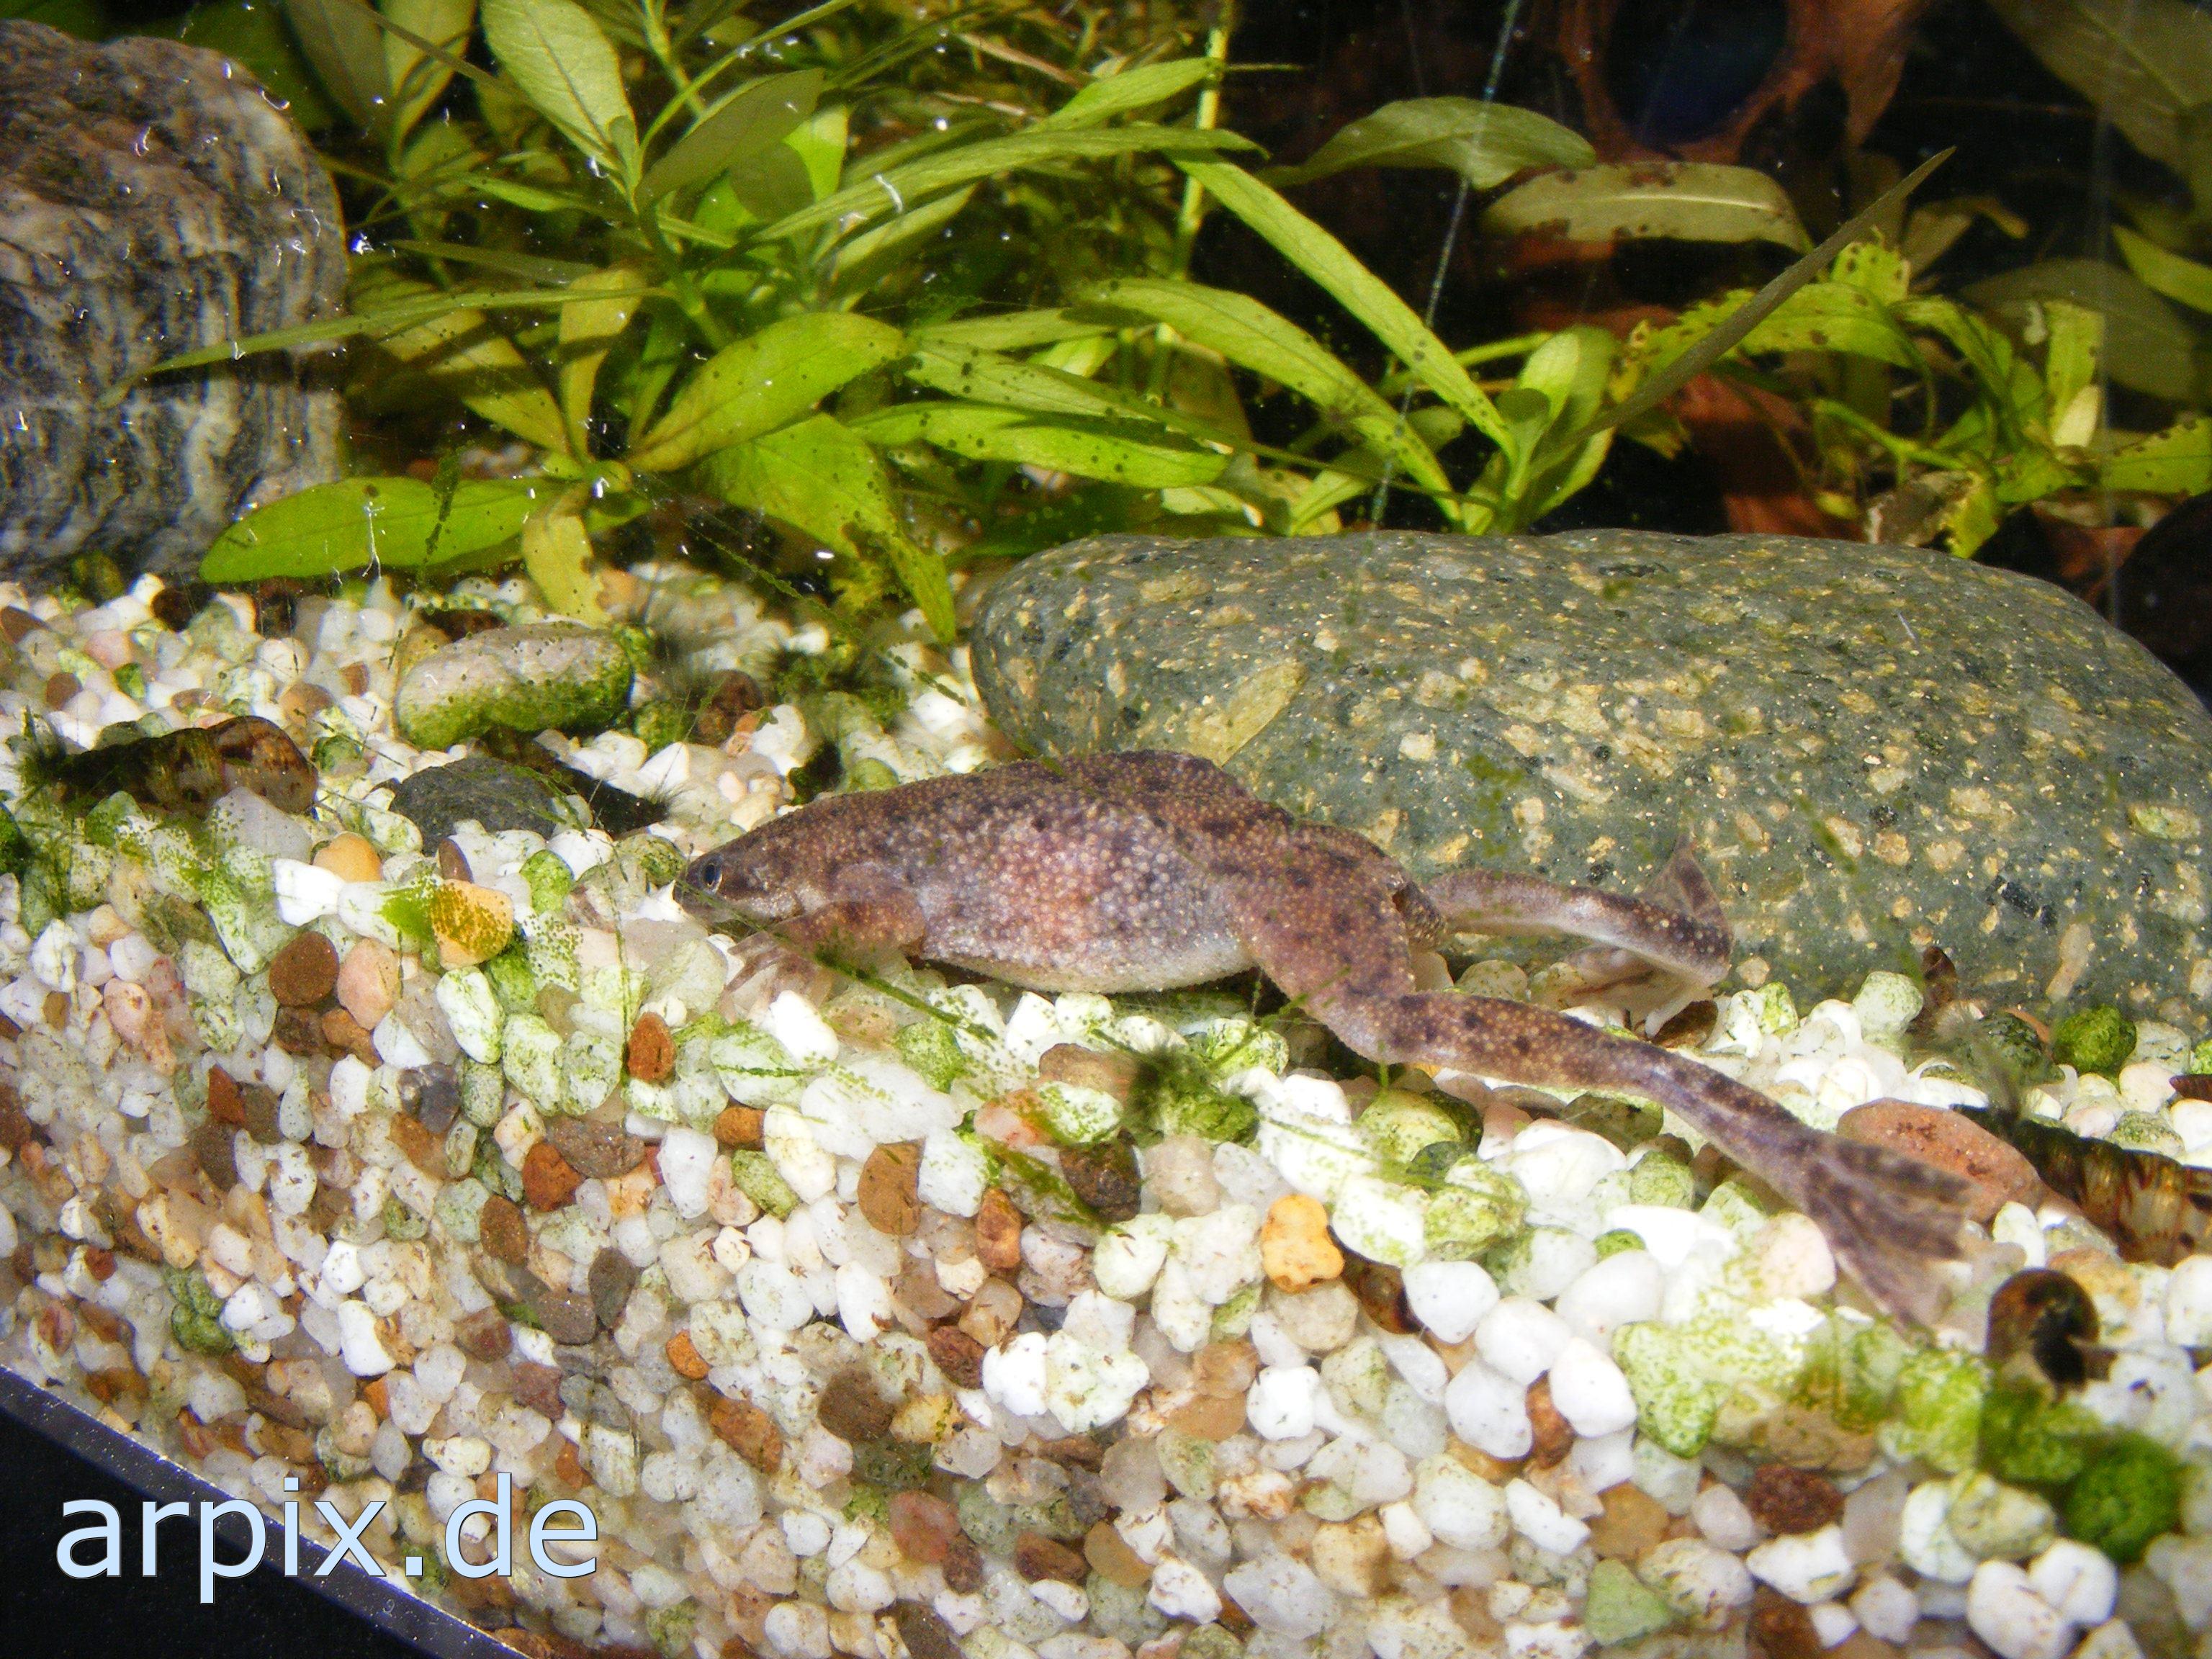 aquarium newt object